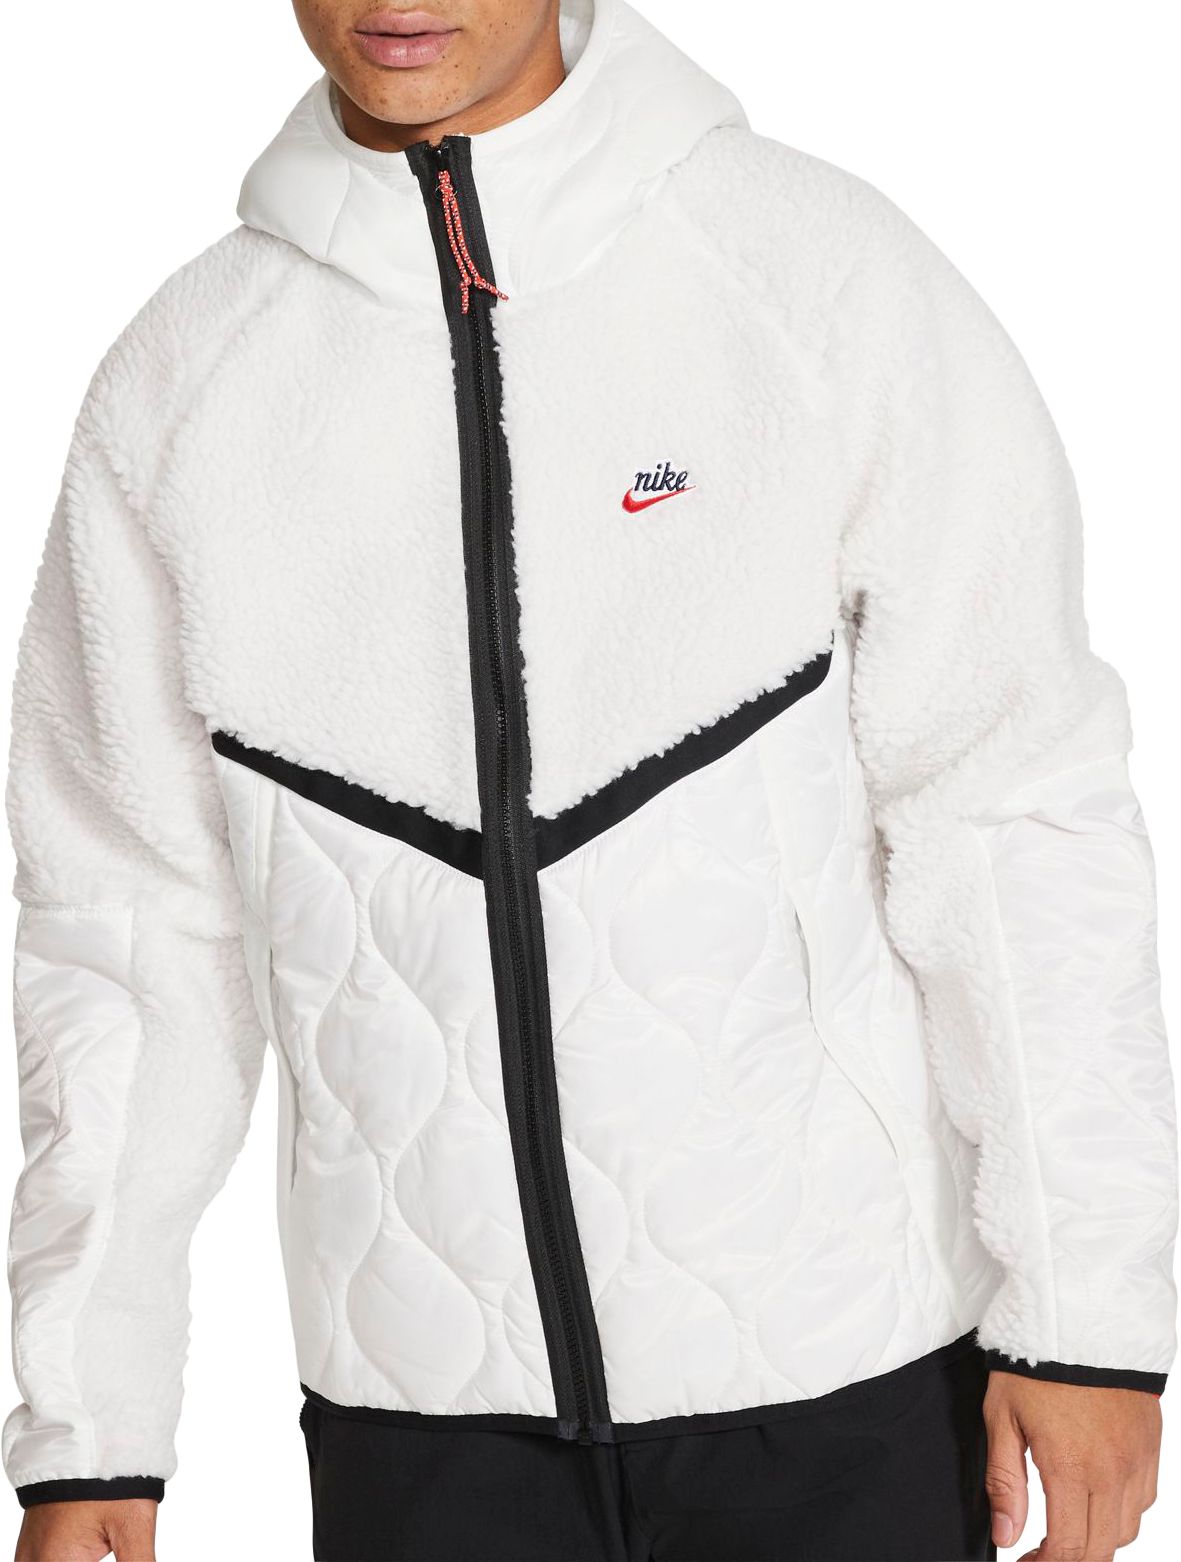 nike sherpa jacket white